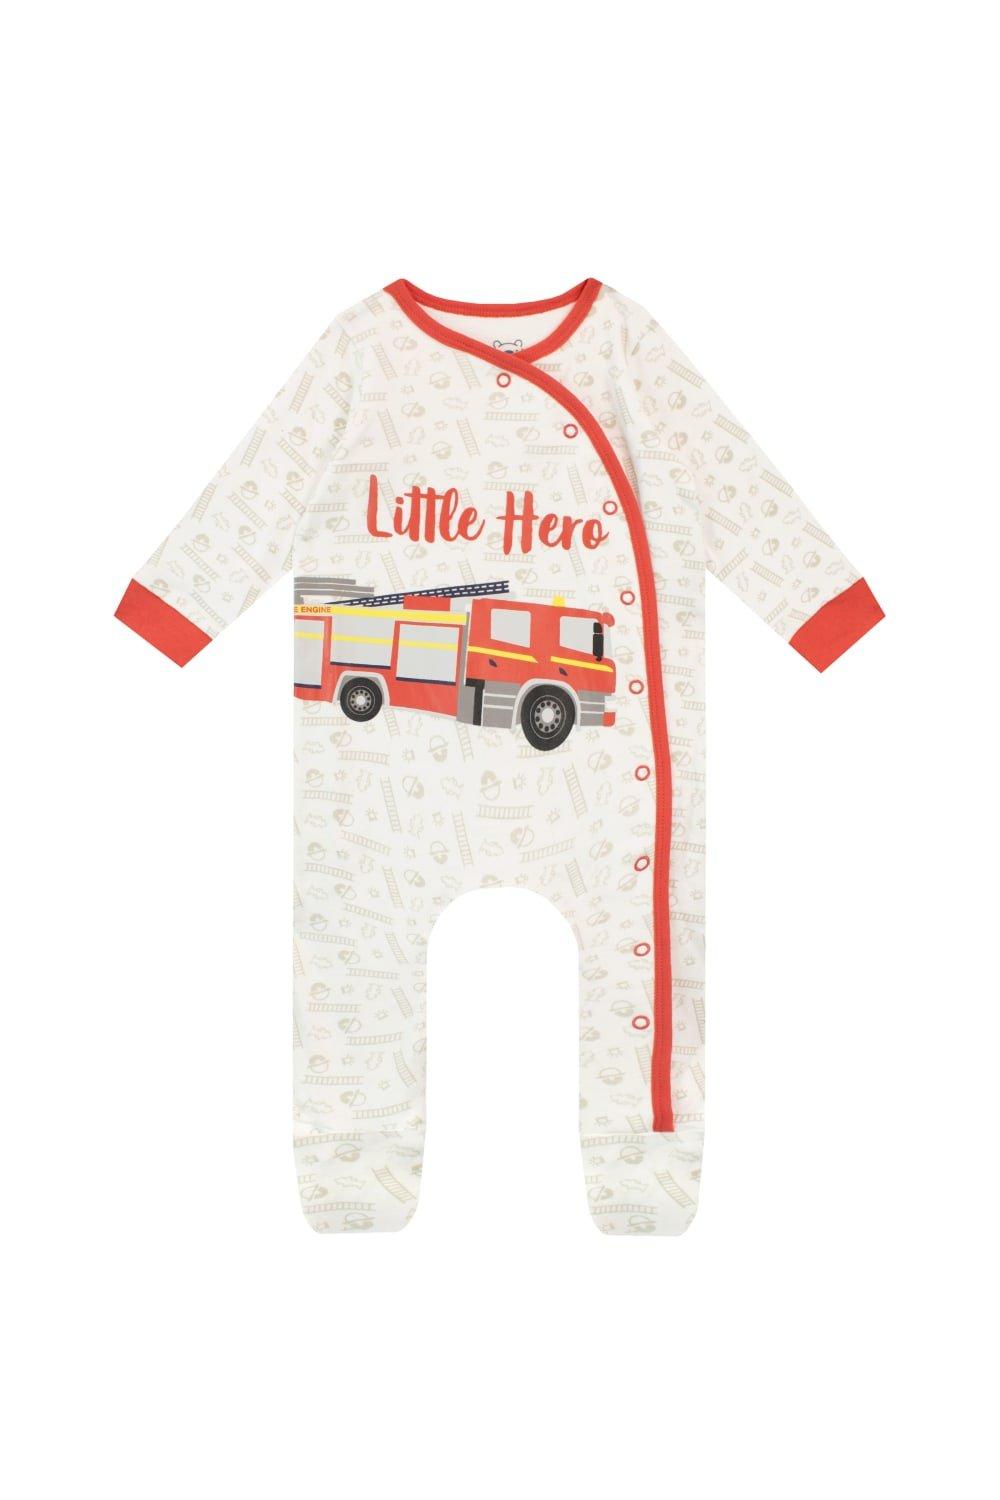 Baby Little Hero Fire Engine Sleepsuit